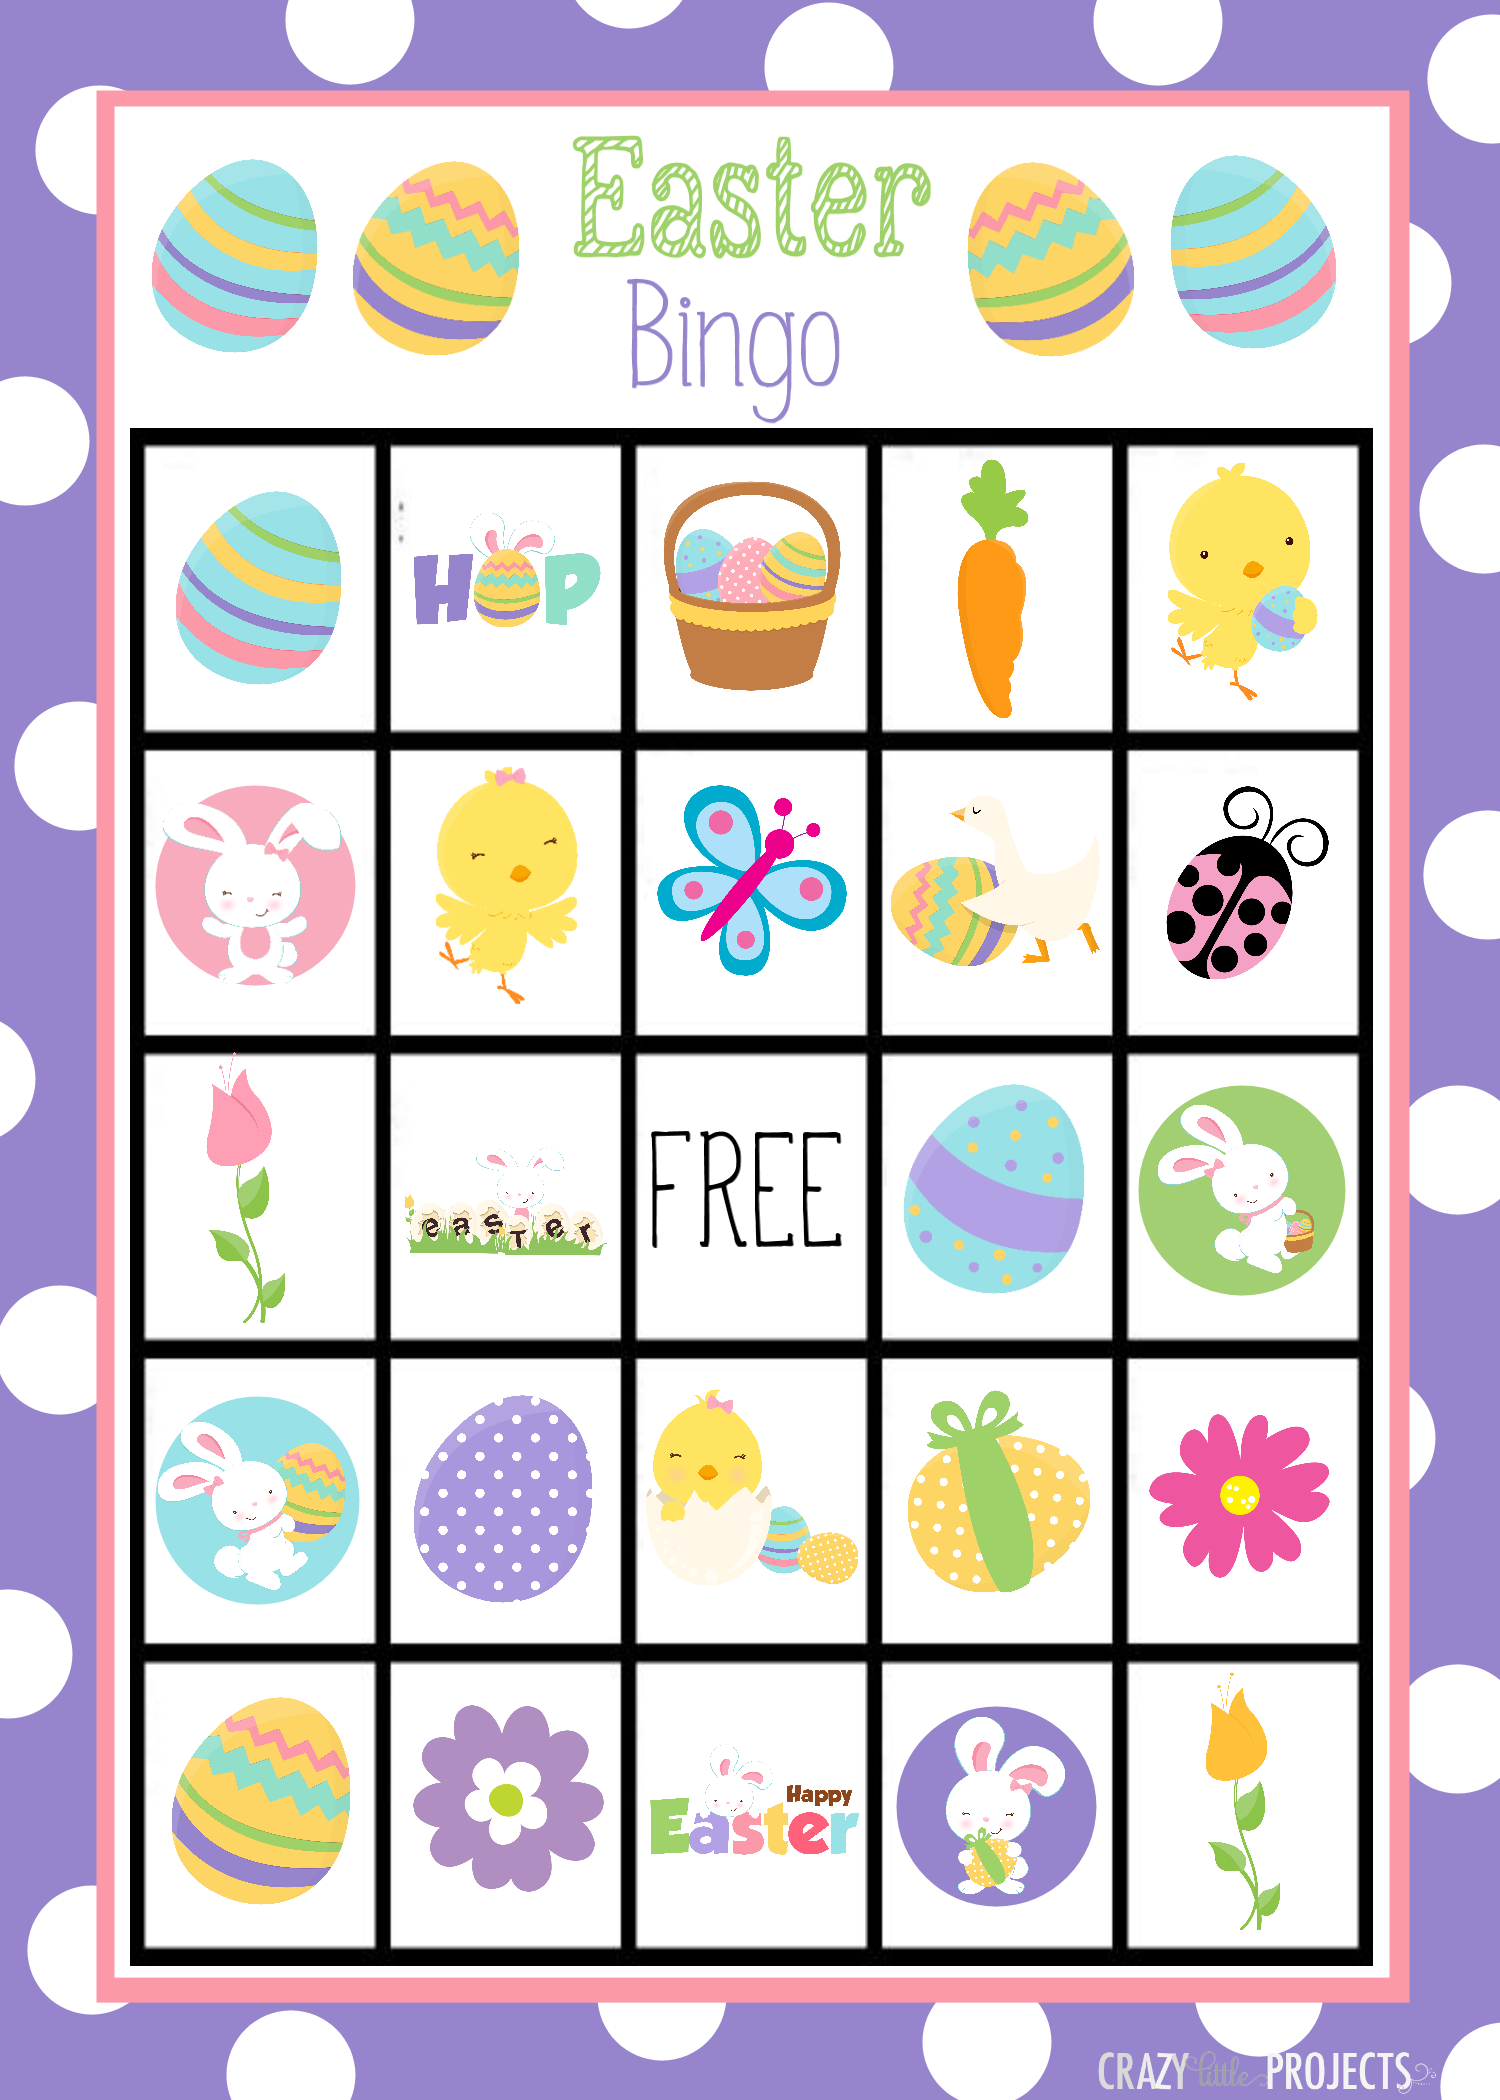 Easter Bingo Game Free Printable FREE PRINTABLE TEMPLATES